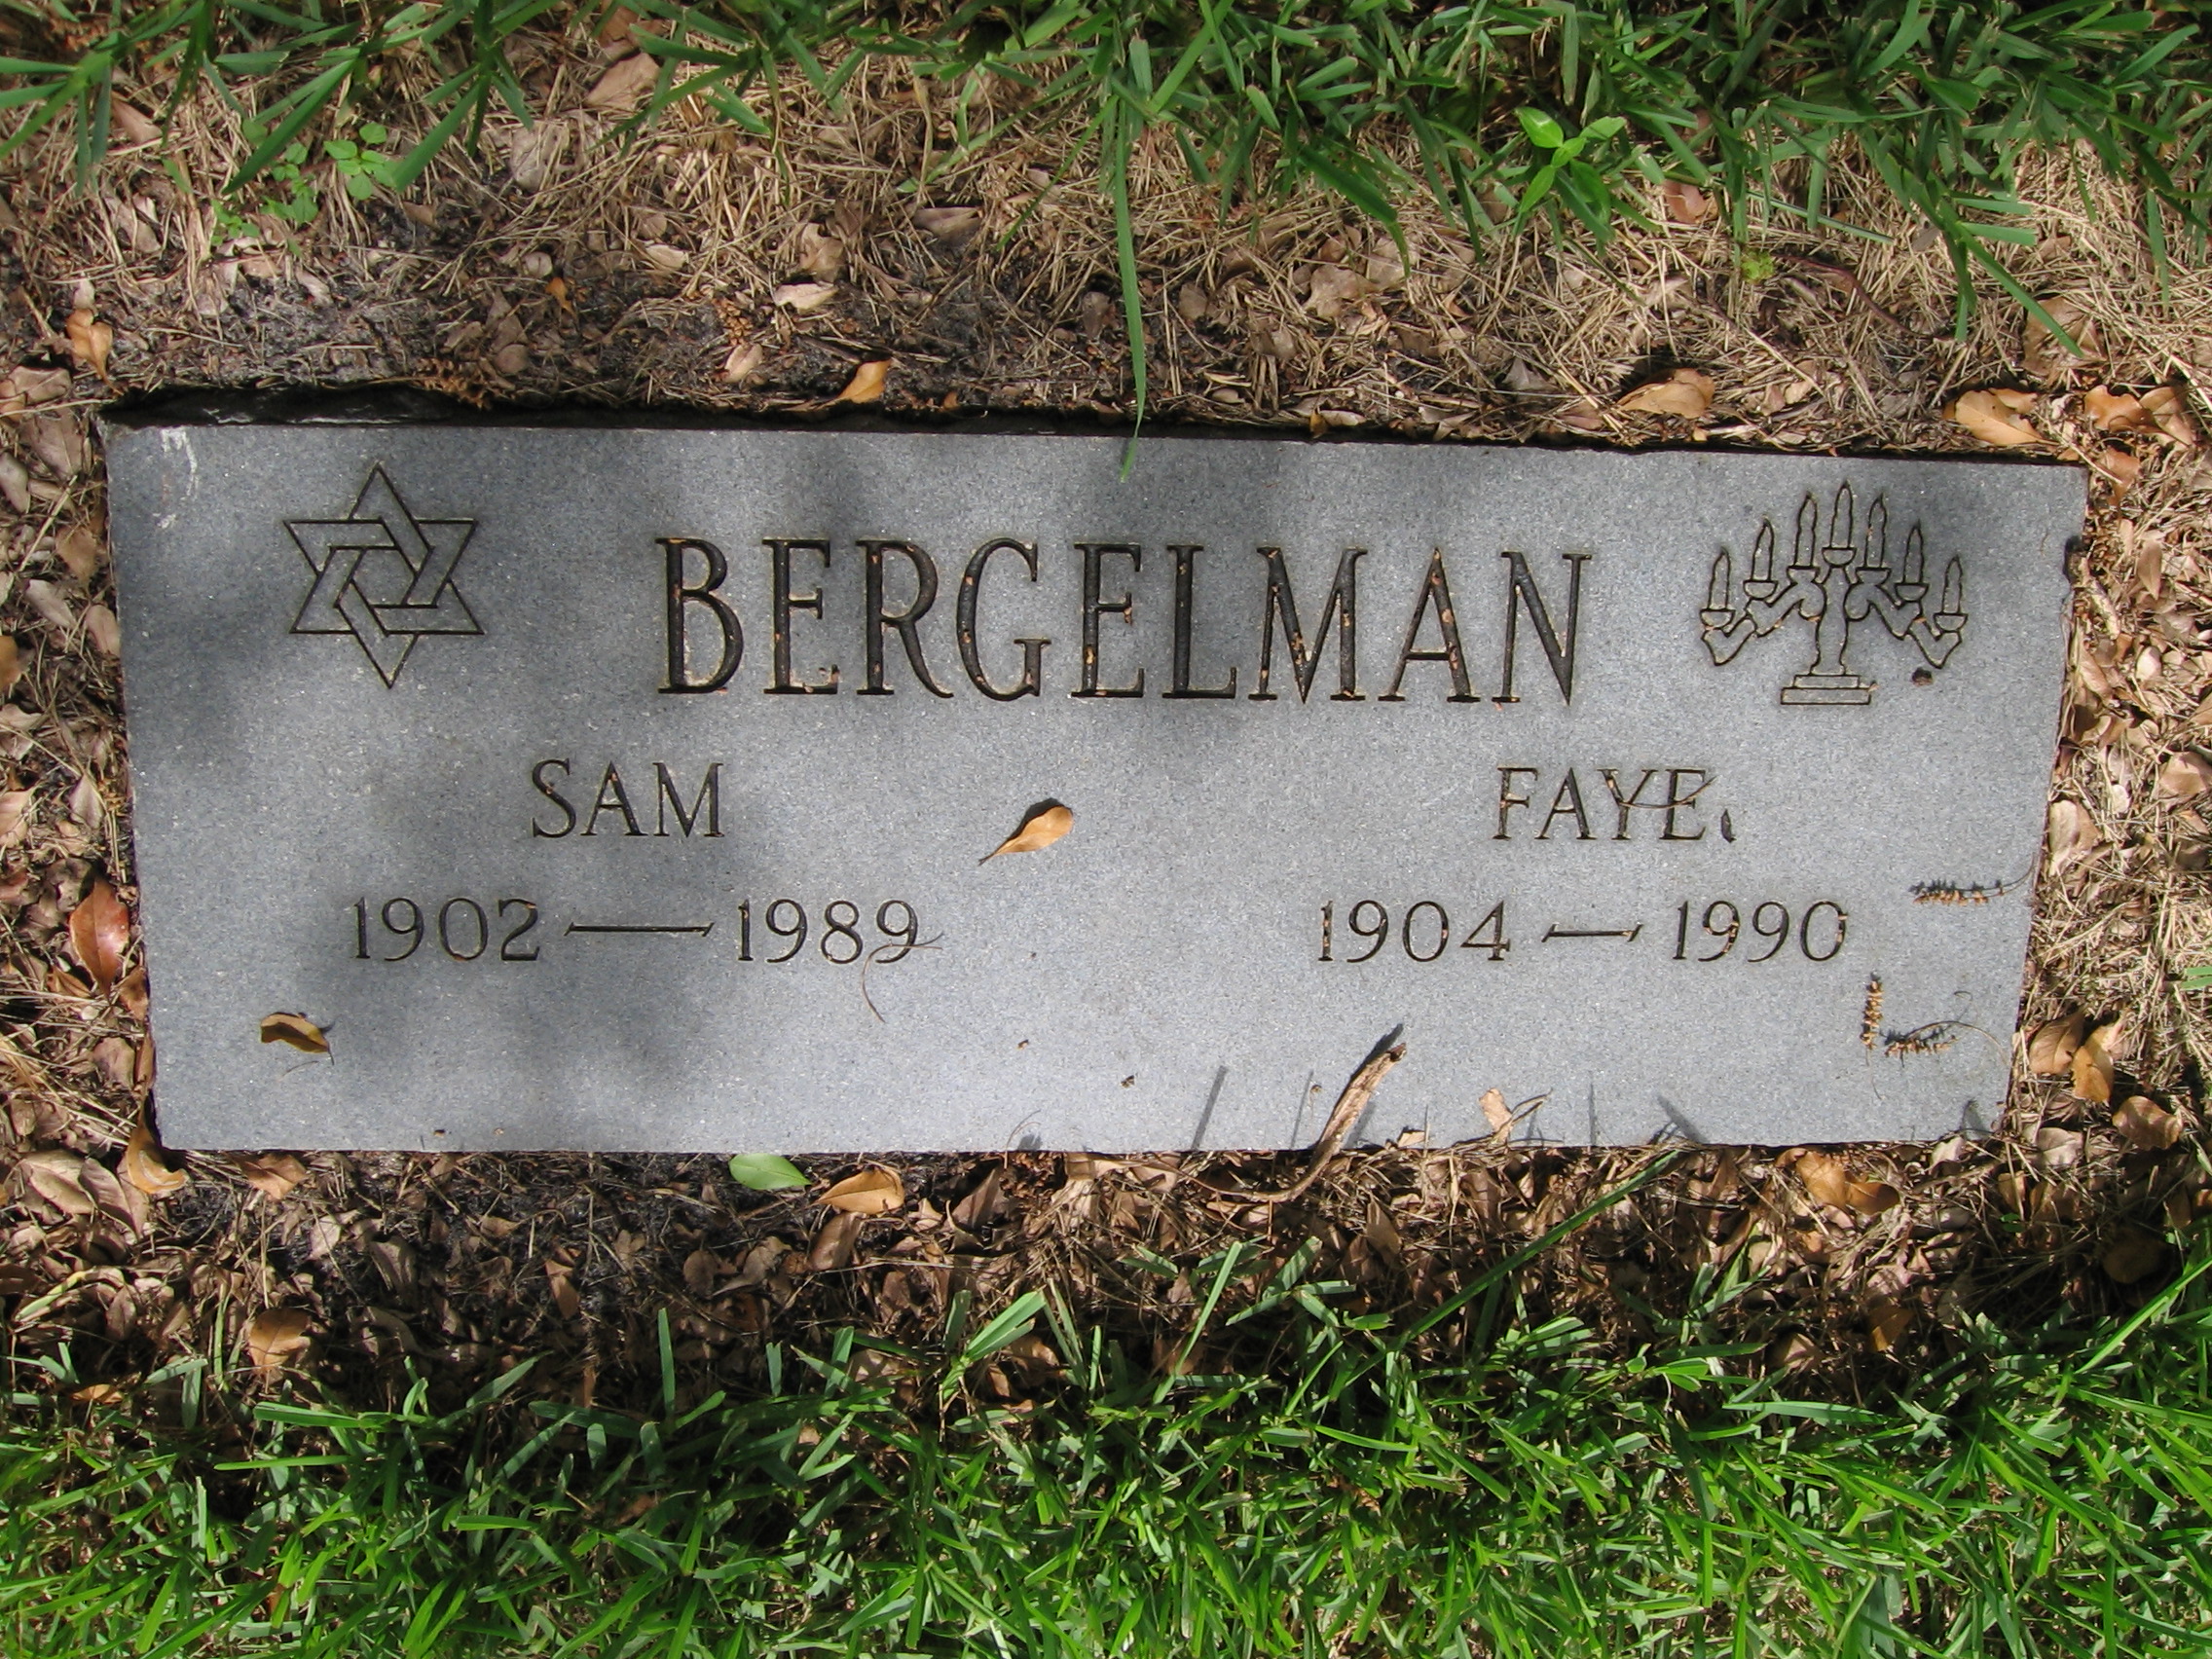 Faye Bergelman